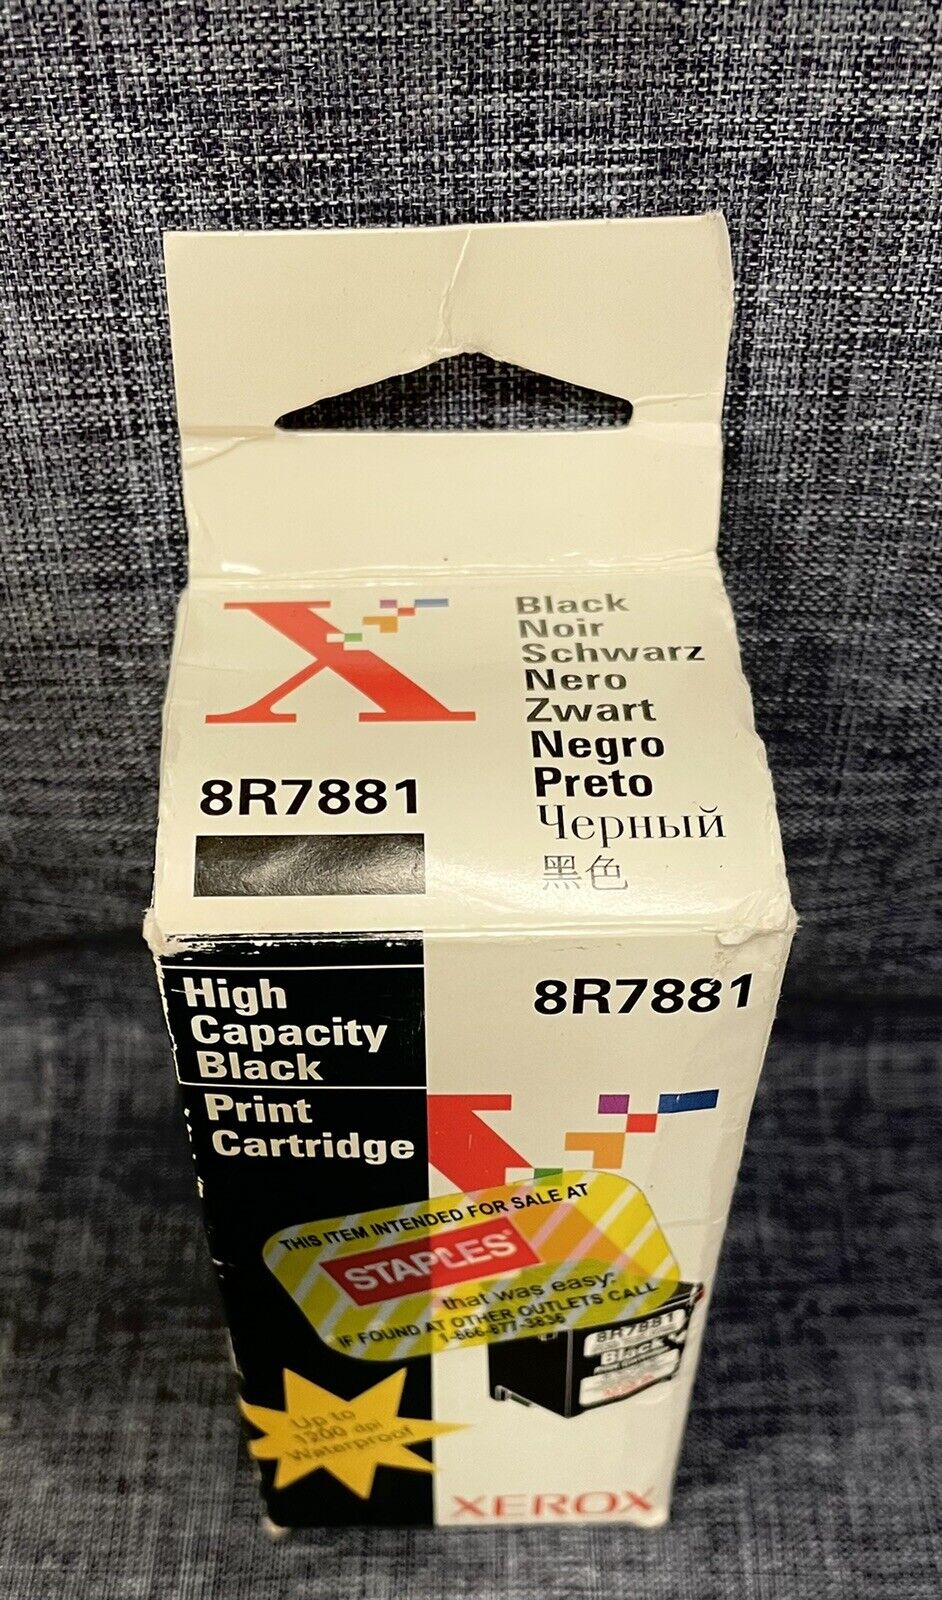 Xerox 8R7881 Black Ink Cartridge Genuine New Sealed Box Old stock